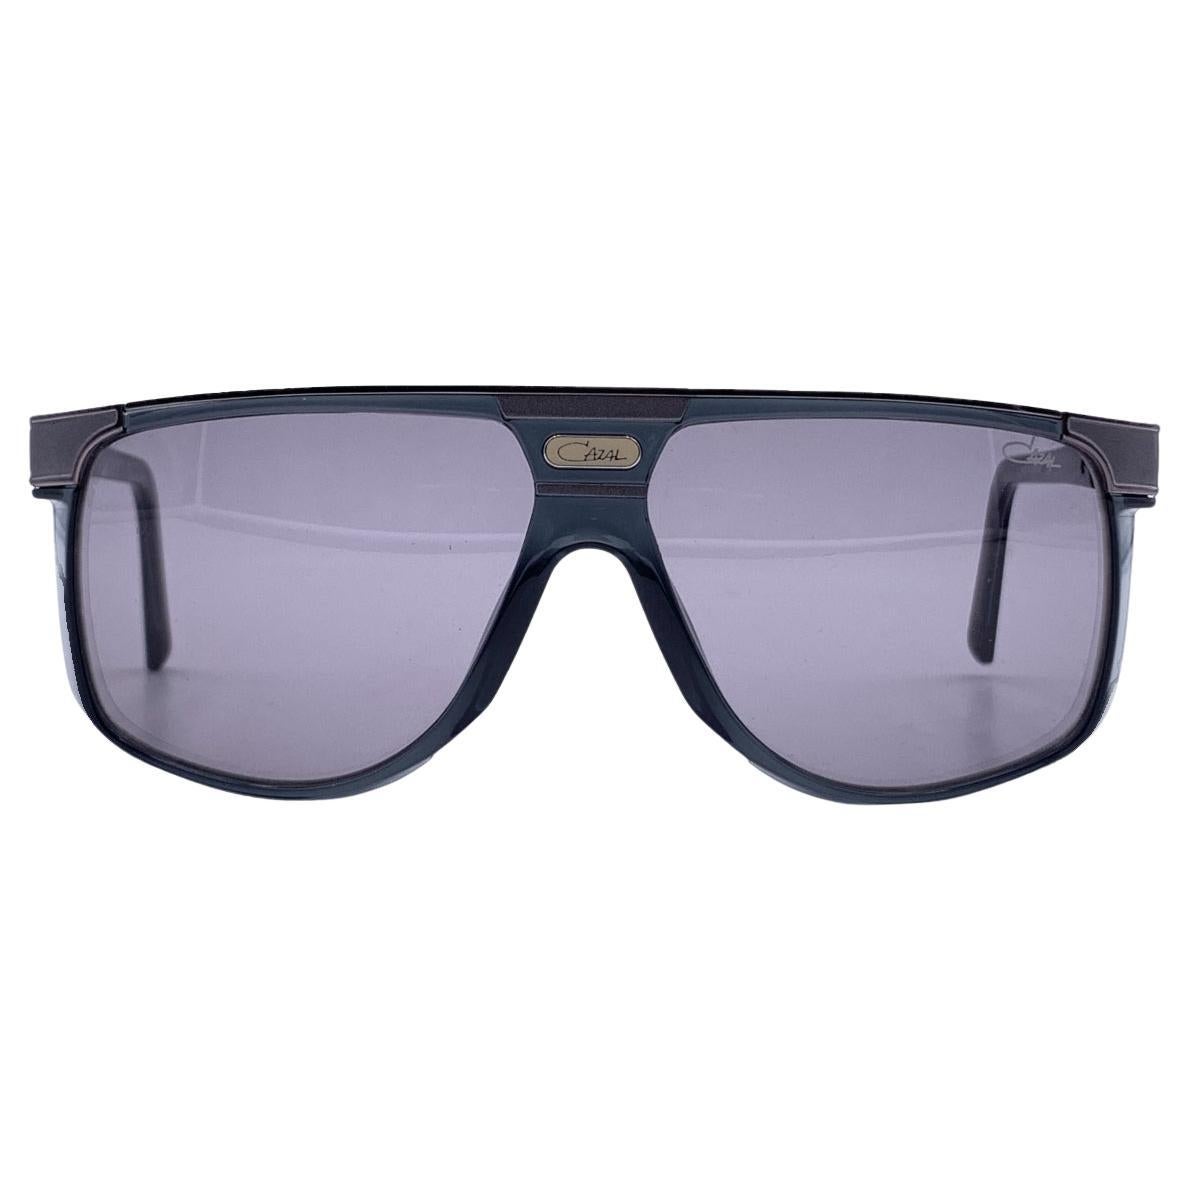 Cazal Grey Gunmetal Acetate Sunglasses Mod. 673 003 61/12 150 mm For Sale